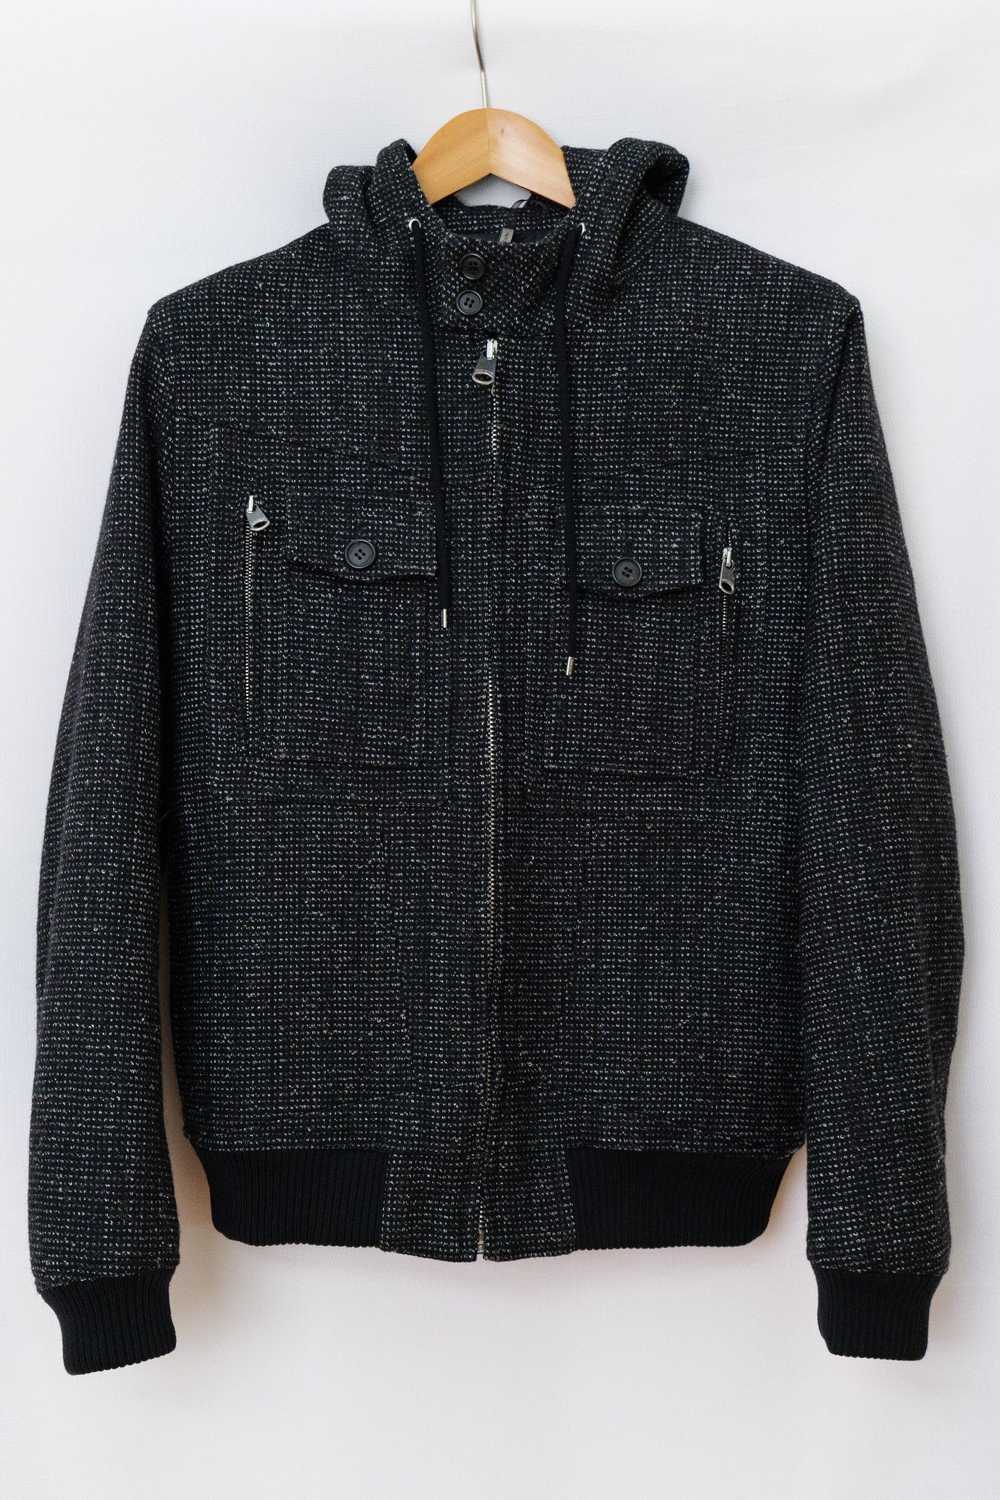 Dior tweed jacket - image 1